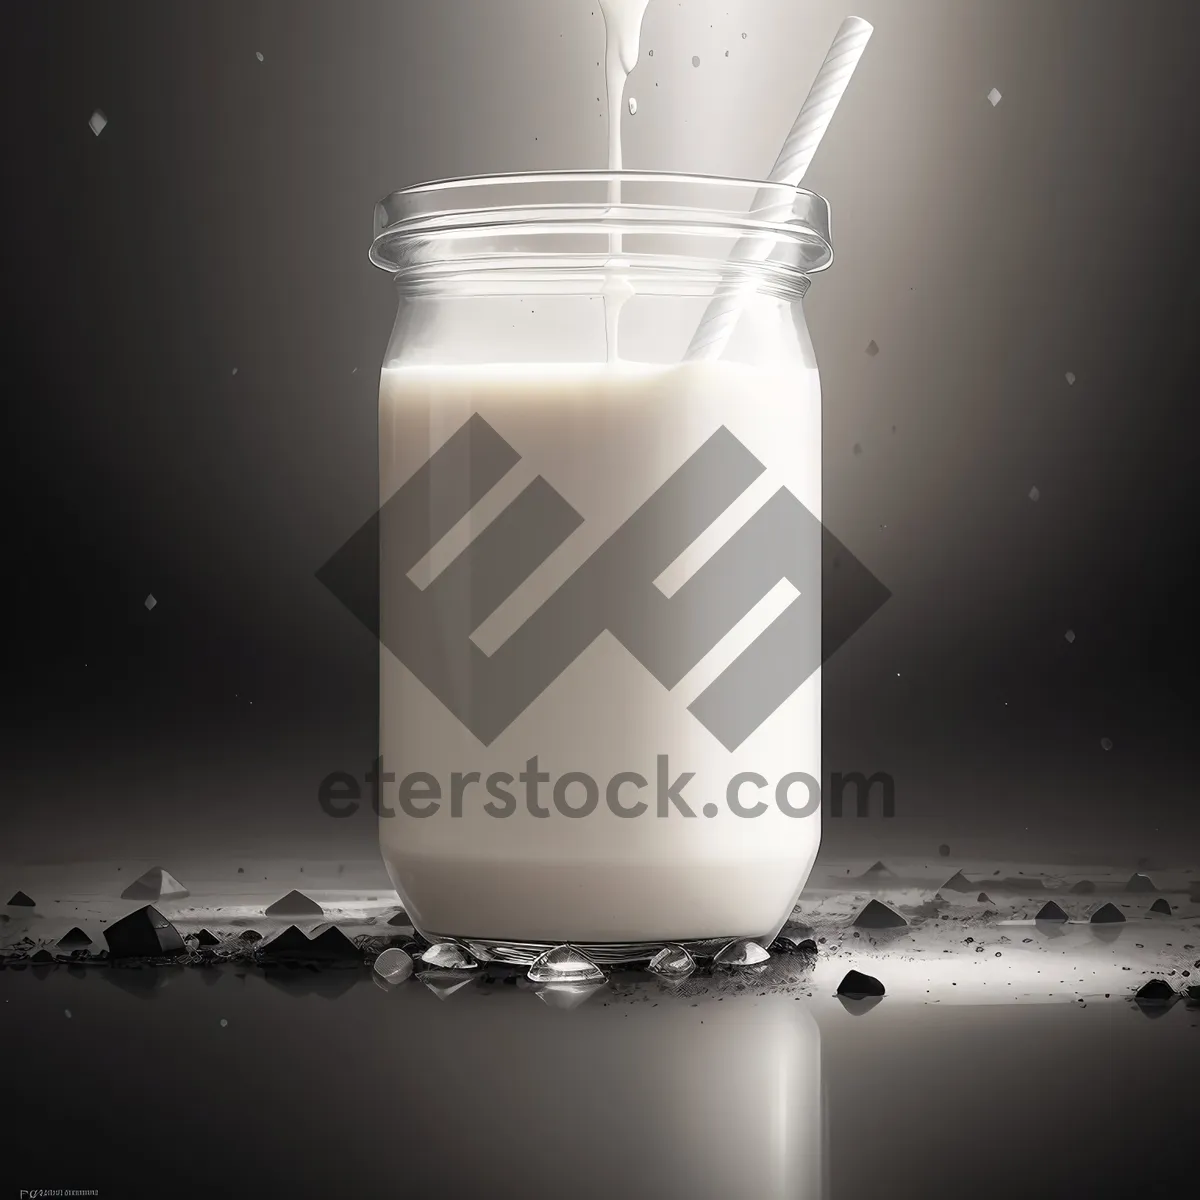 Picture of Creamy Delight: Fresh Milk in Glass